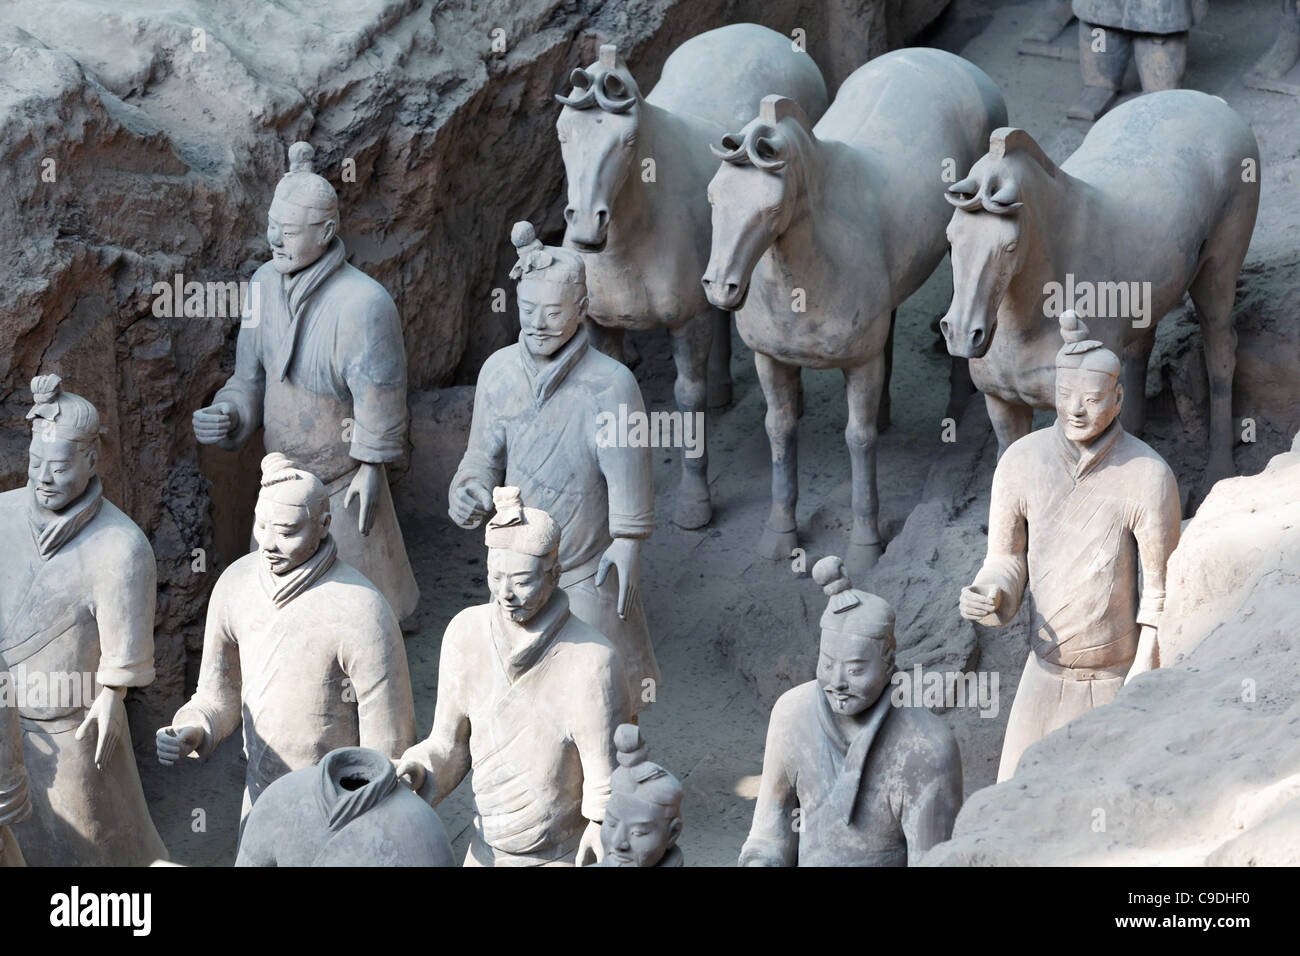 Cina, Xi'an, soldati di terracotta e i Cavalli di Qin Shi Huang la tomba di Foto Stock